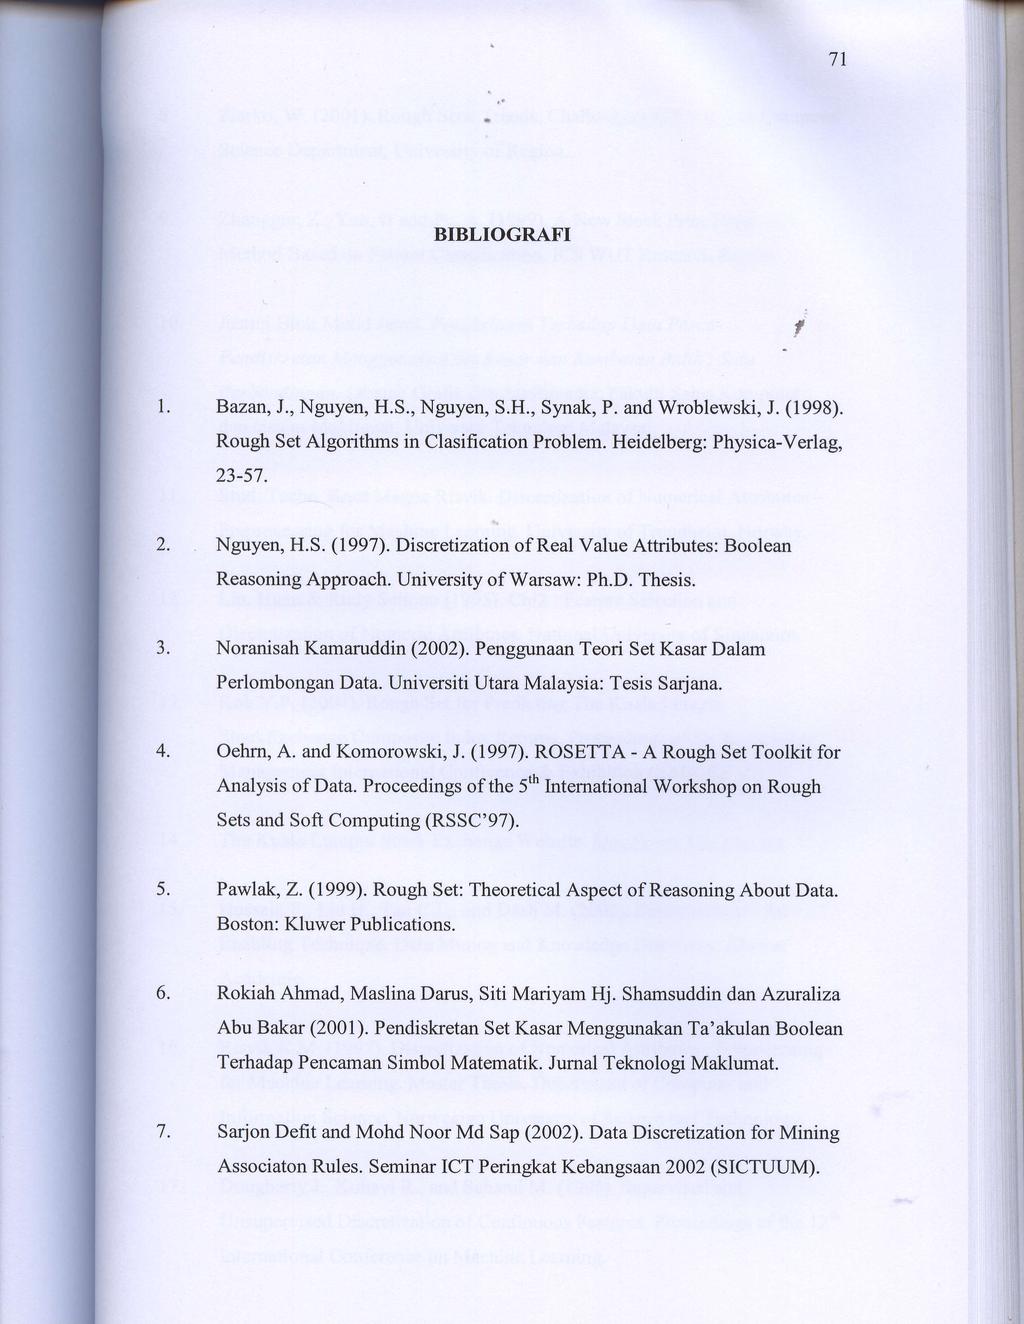 7l BIBLIOGRAFI, Bazan, J., Nguyen, H.S., Nguyen, S.H., Synak, P. and Wroblewski, J. (1998). Rough Set Algorithms in Clasification Problem. Heidelberg: Physica-Verlag, 23-57. Nguyen, H.S. (1997).